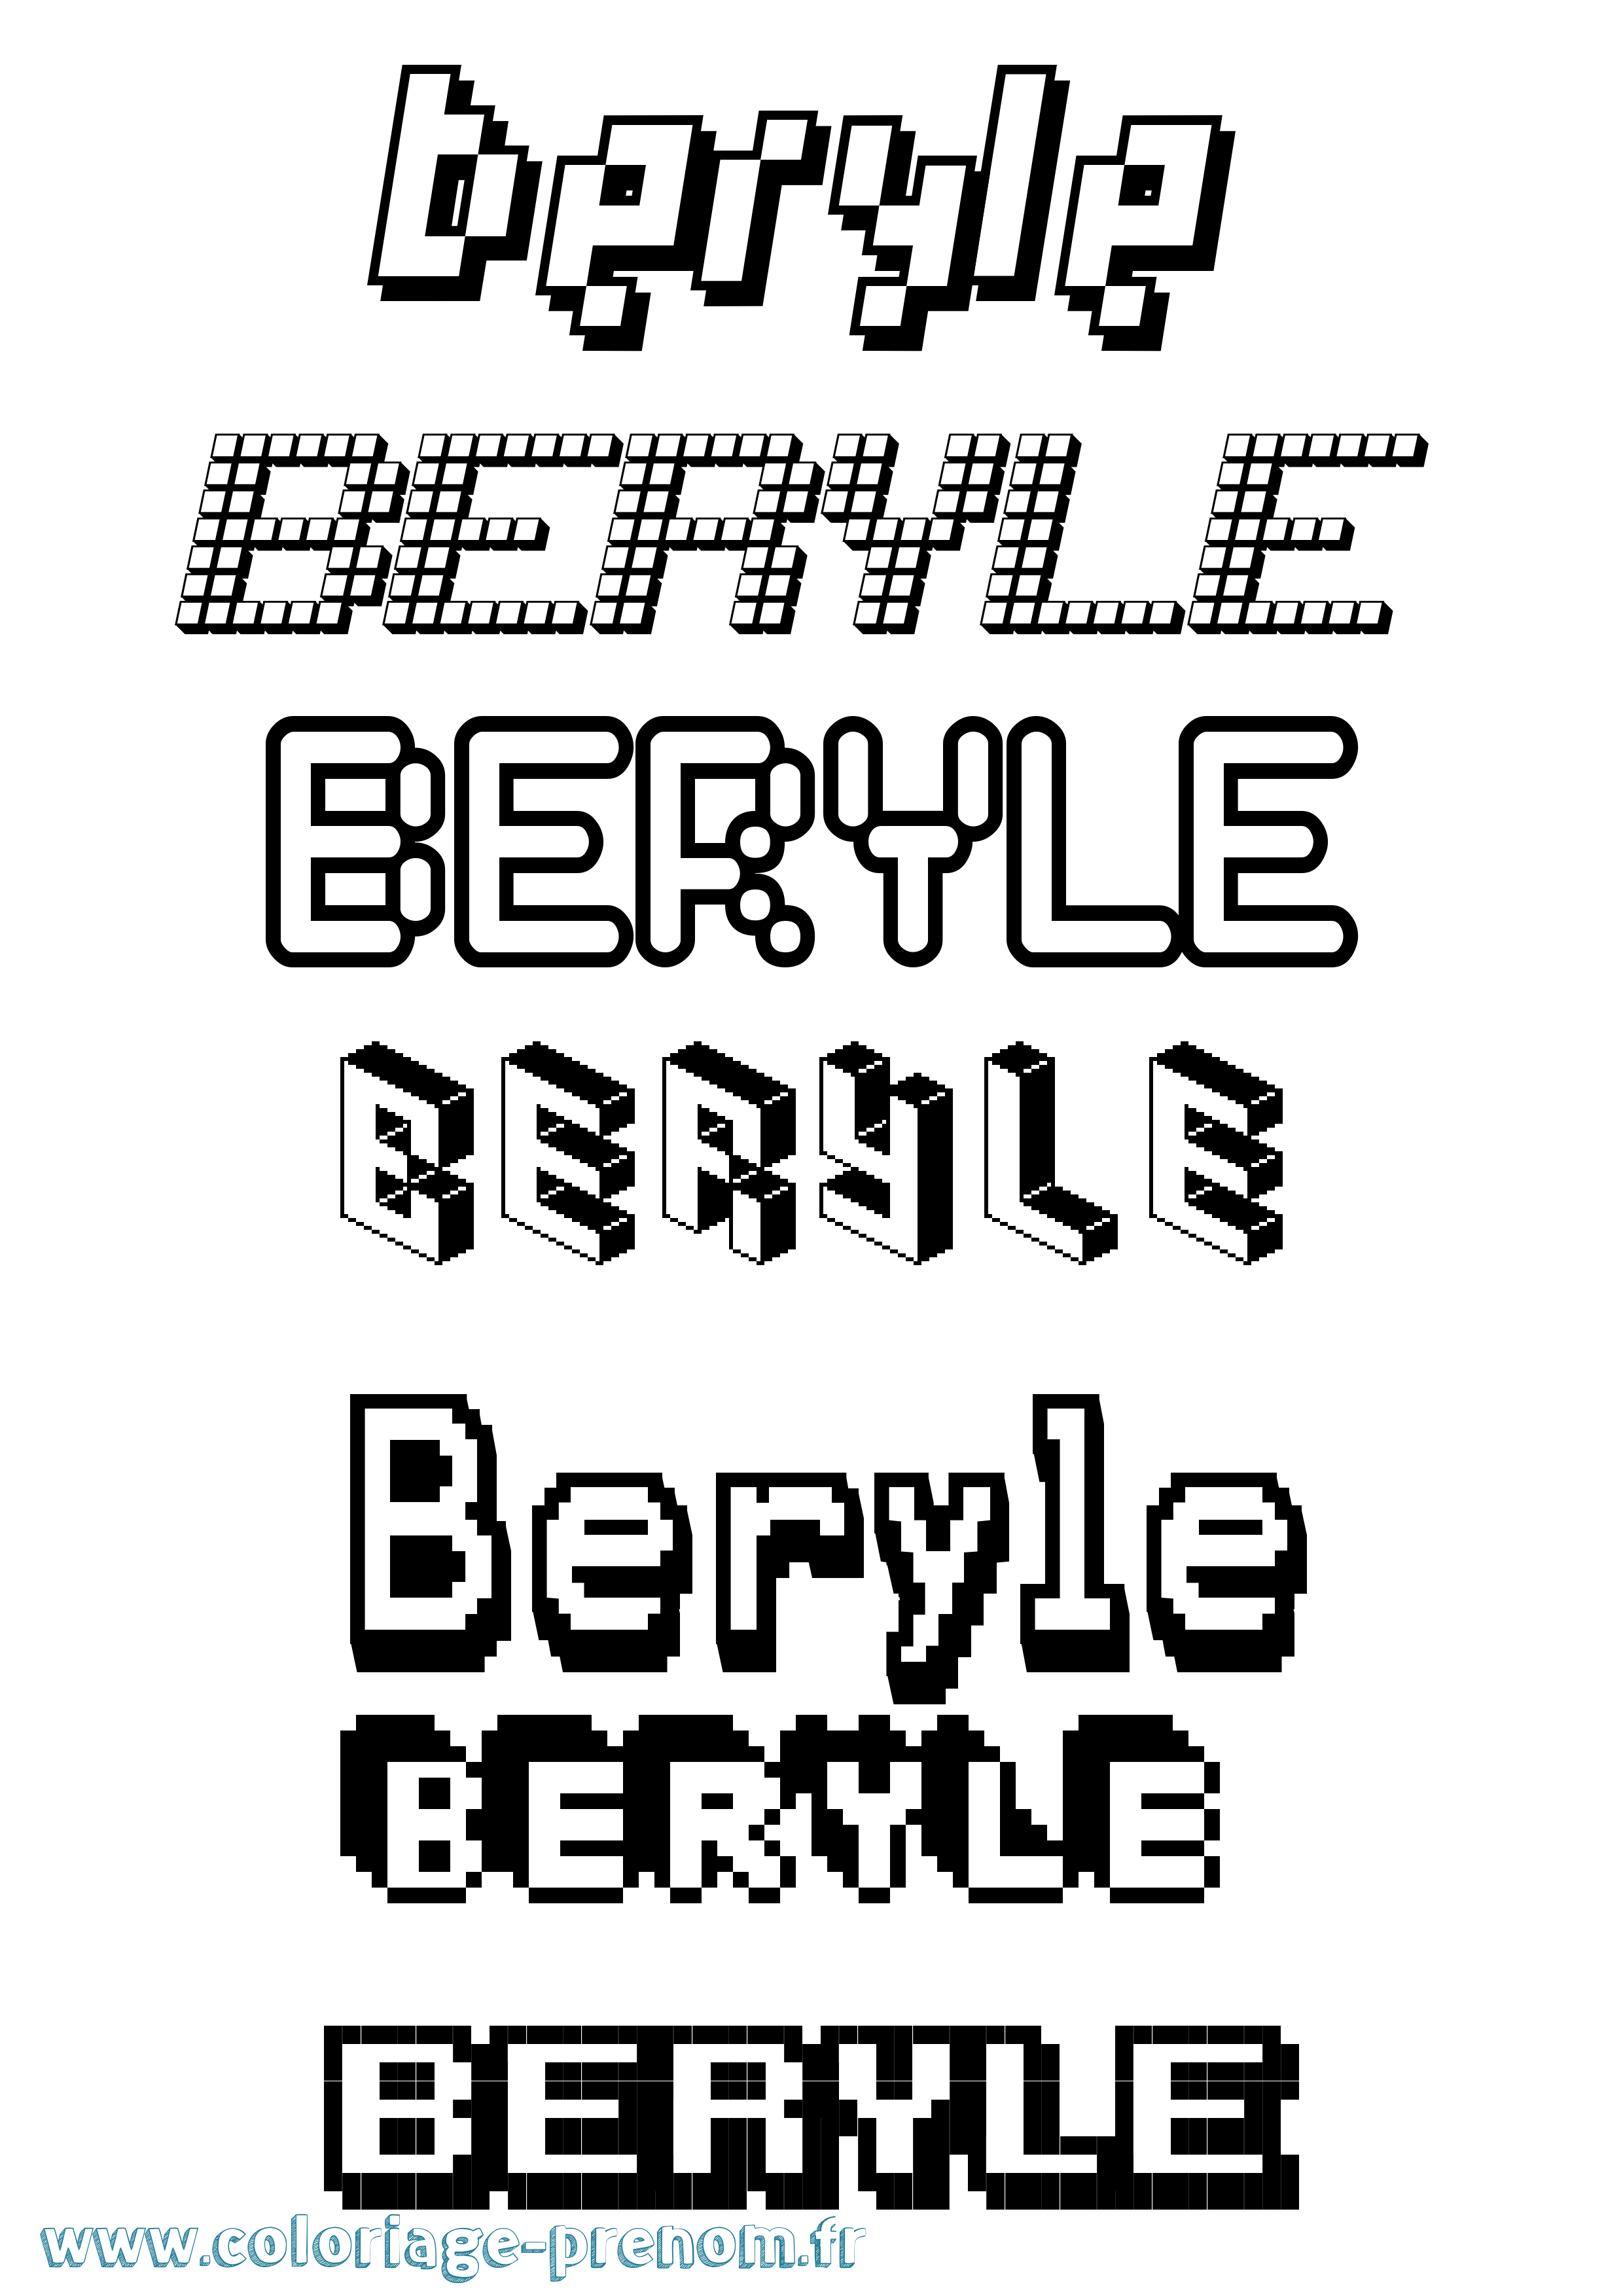 Coloriage prénom Beryle Pixel